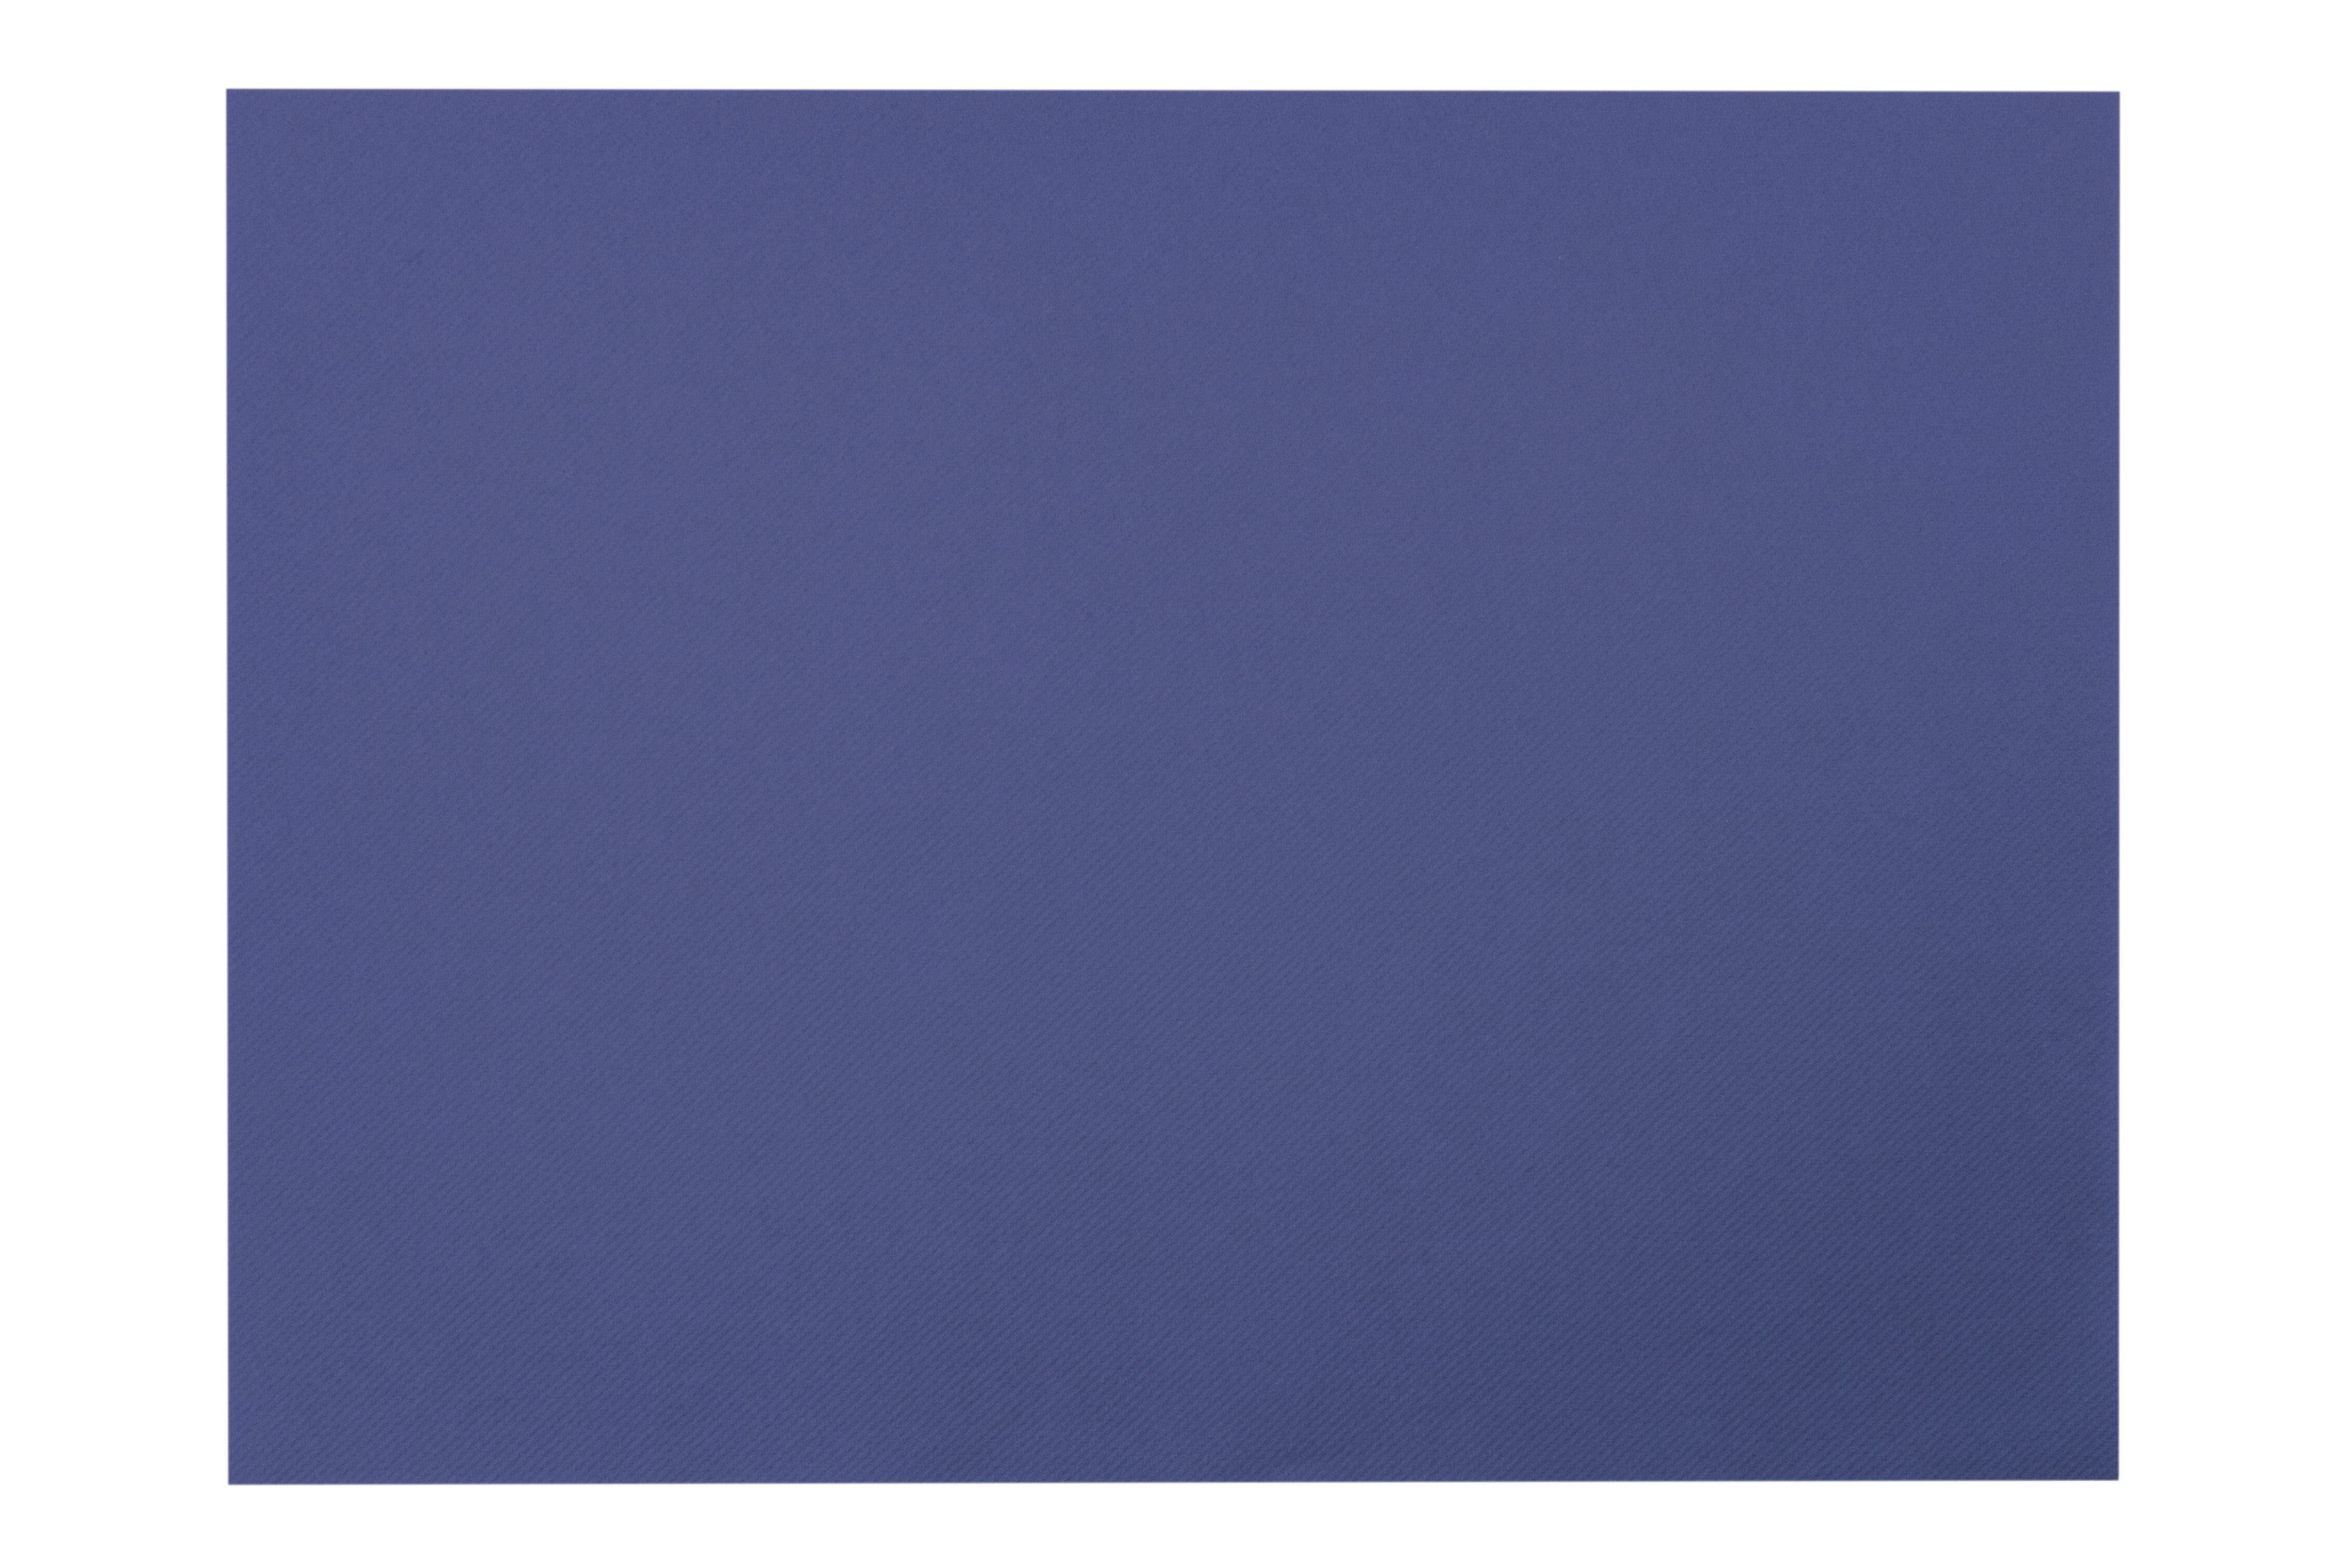 Mank Tischsets Linclass 40 x 30 cm, Basic royalblau